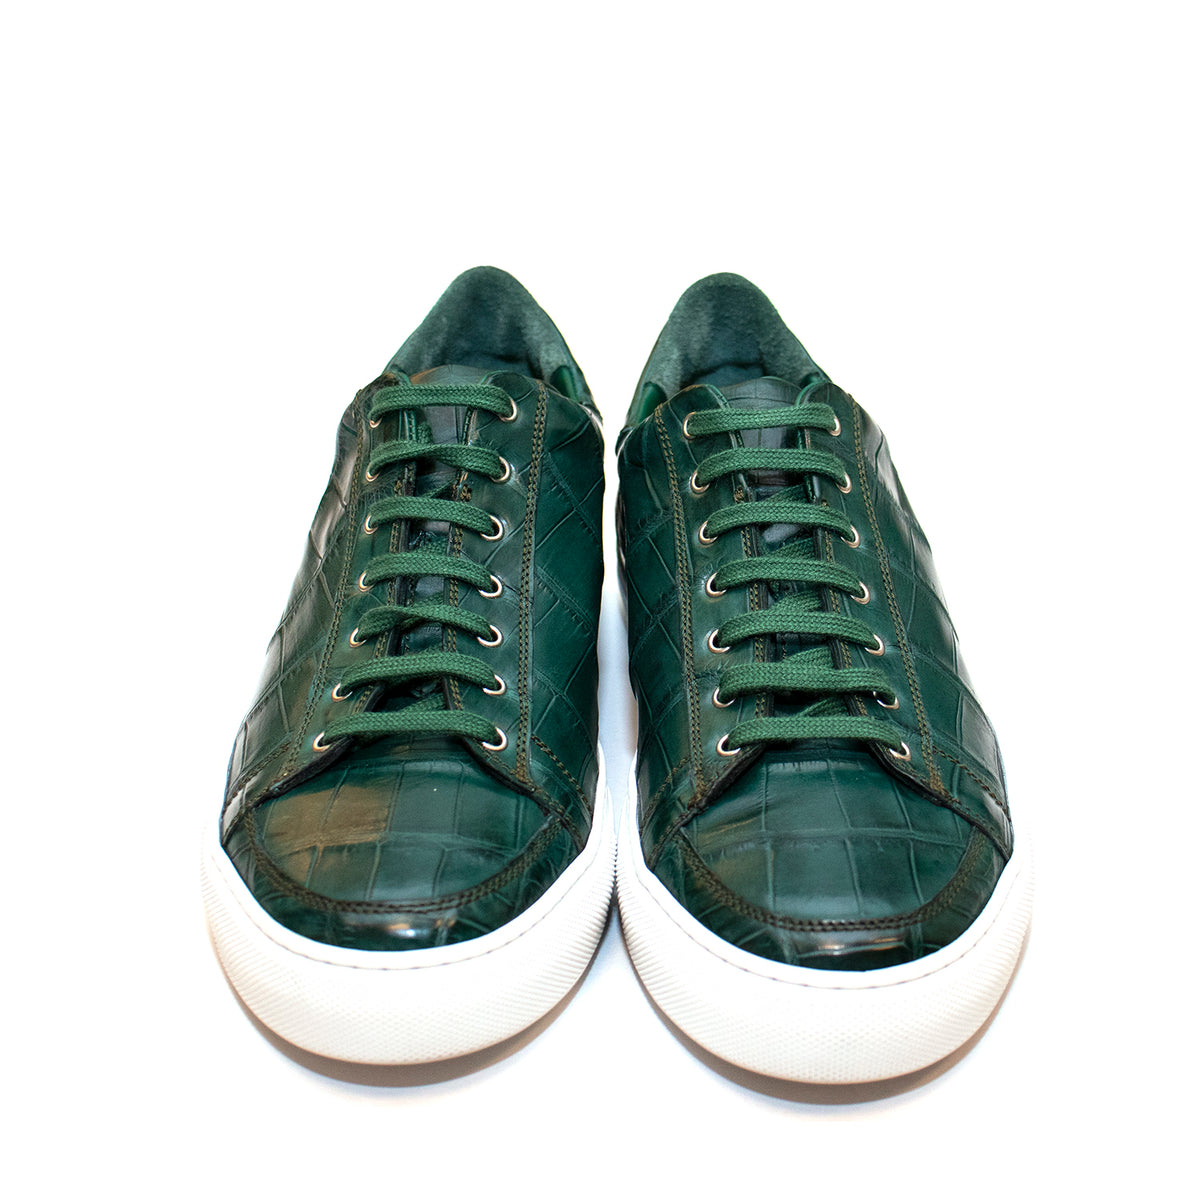 New York Green Sneakers